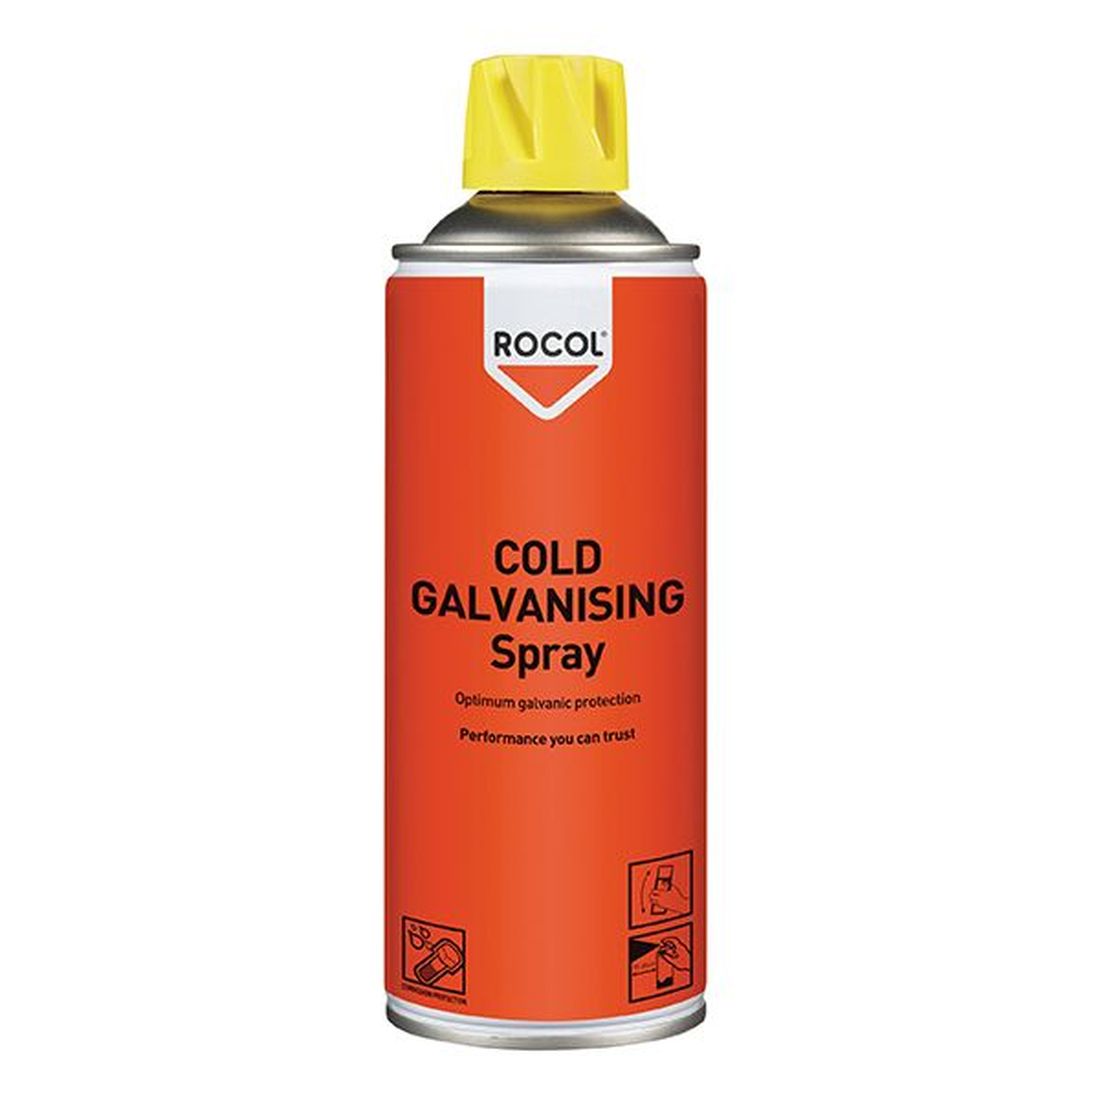 ROCOL COLD GALVANISING Spray 400ml      